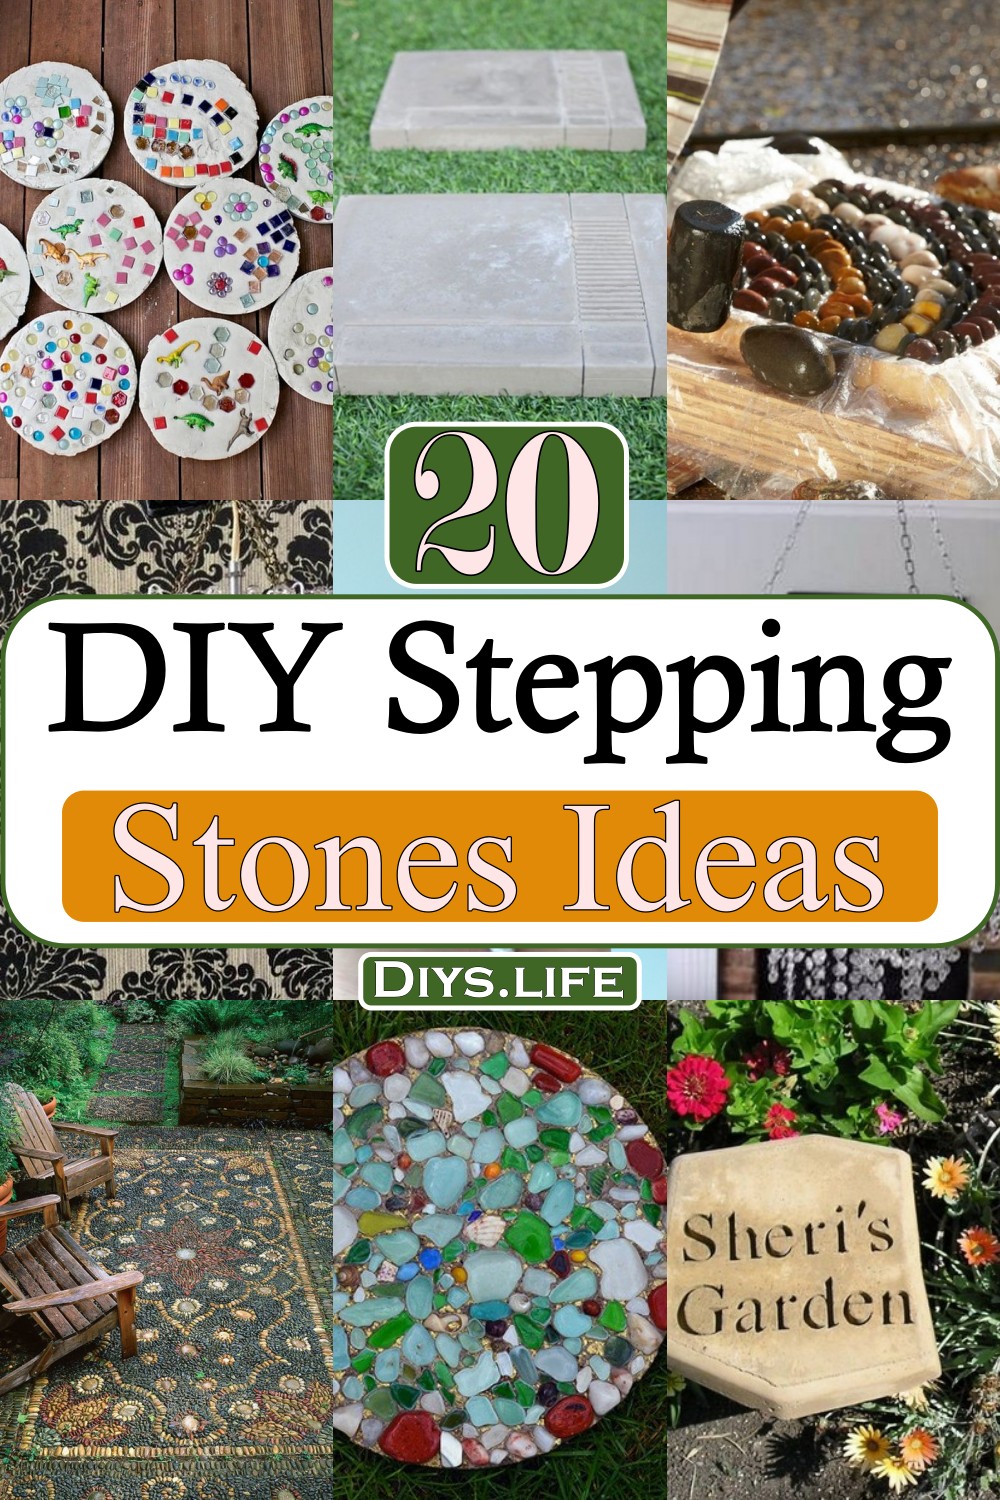 DIY Stepping Stones Ideas